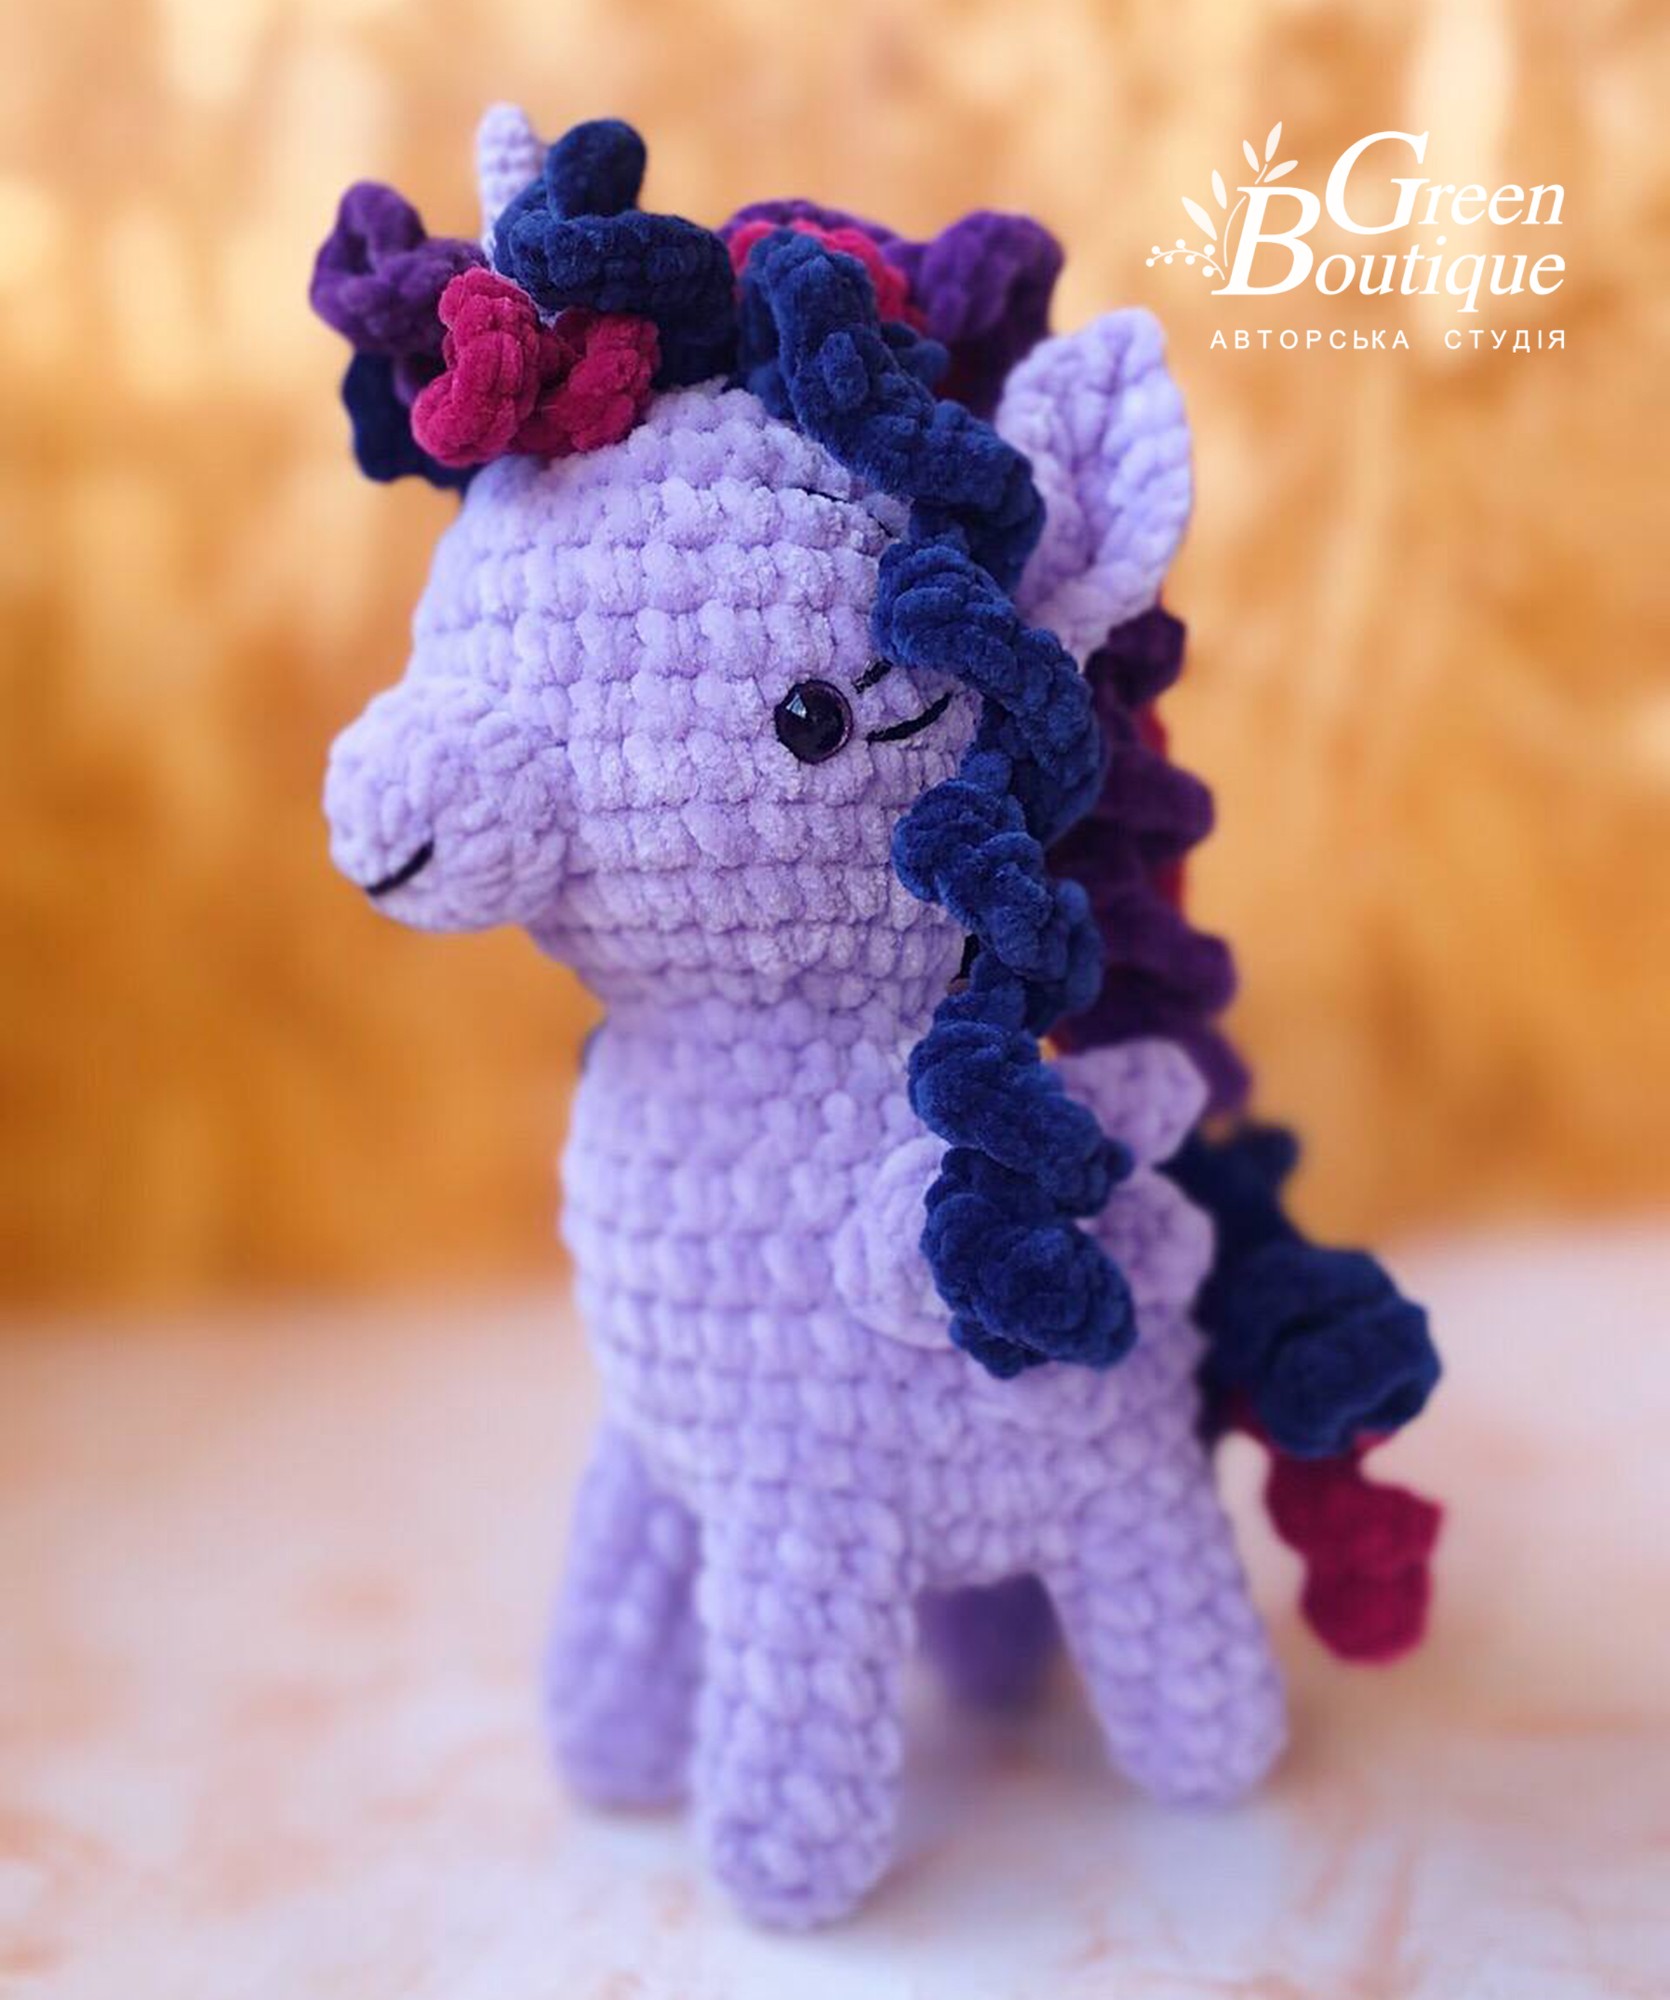 Plush toy Purple Unicorn